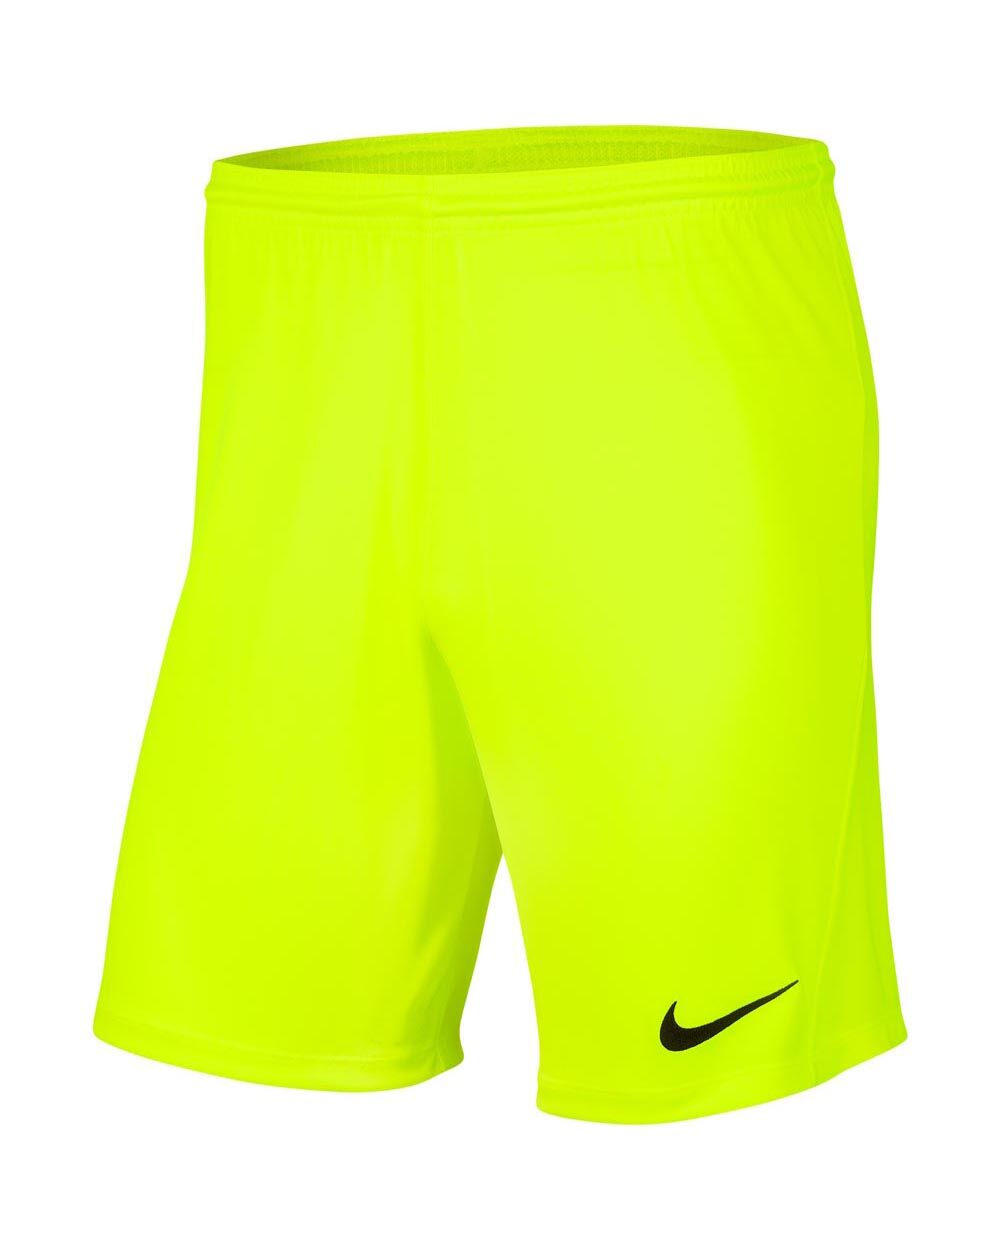 Nike Pantaloncini Park III Giallo Fluorescente Uomo BV6855-702 M